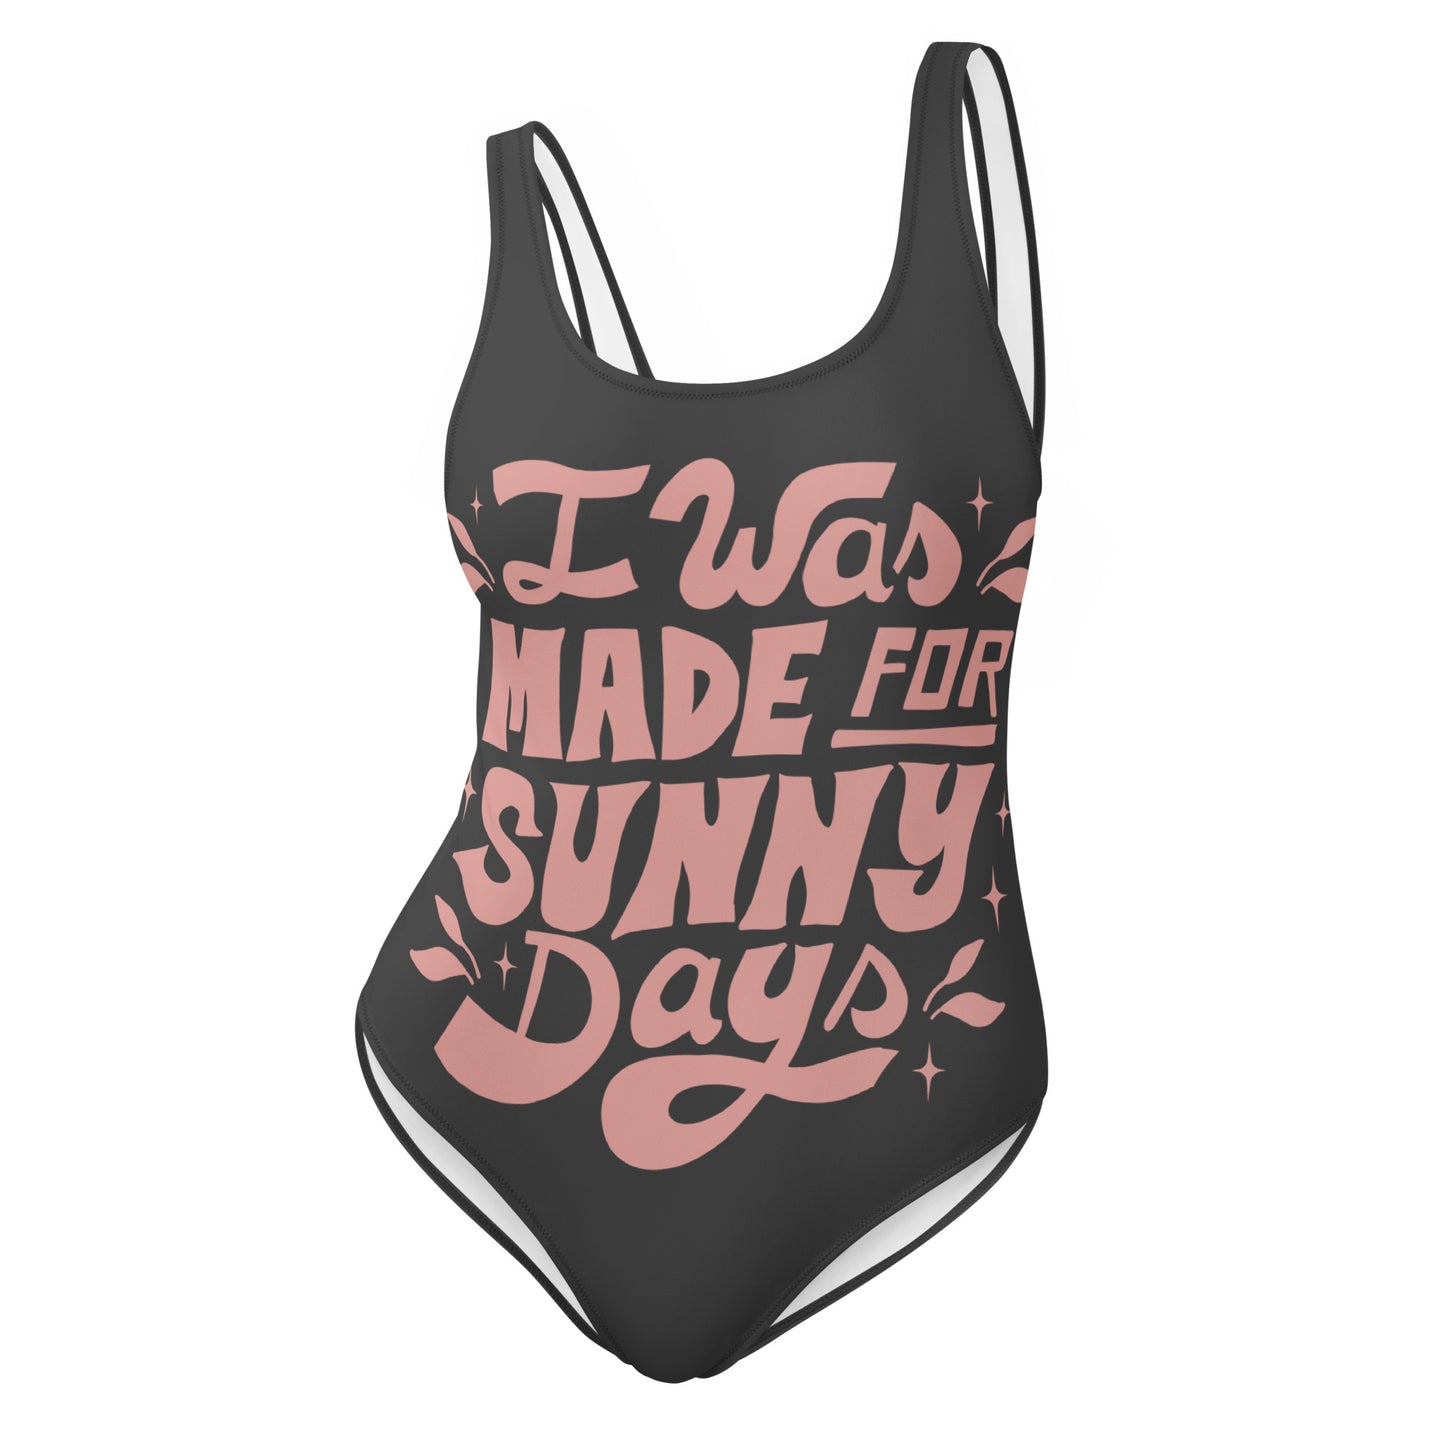 "Sunny days" swimsuit